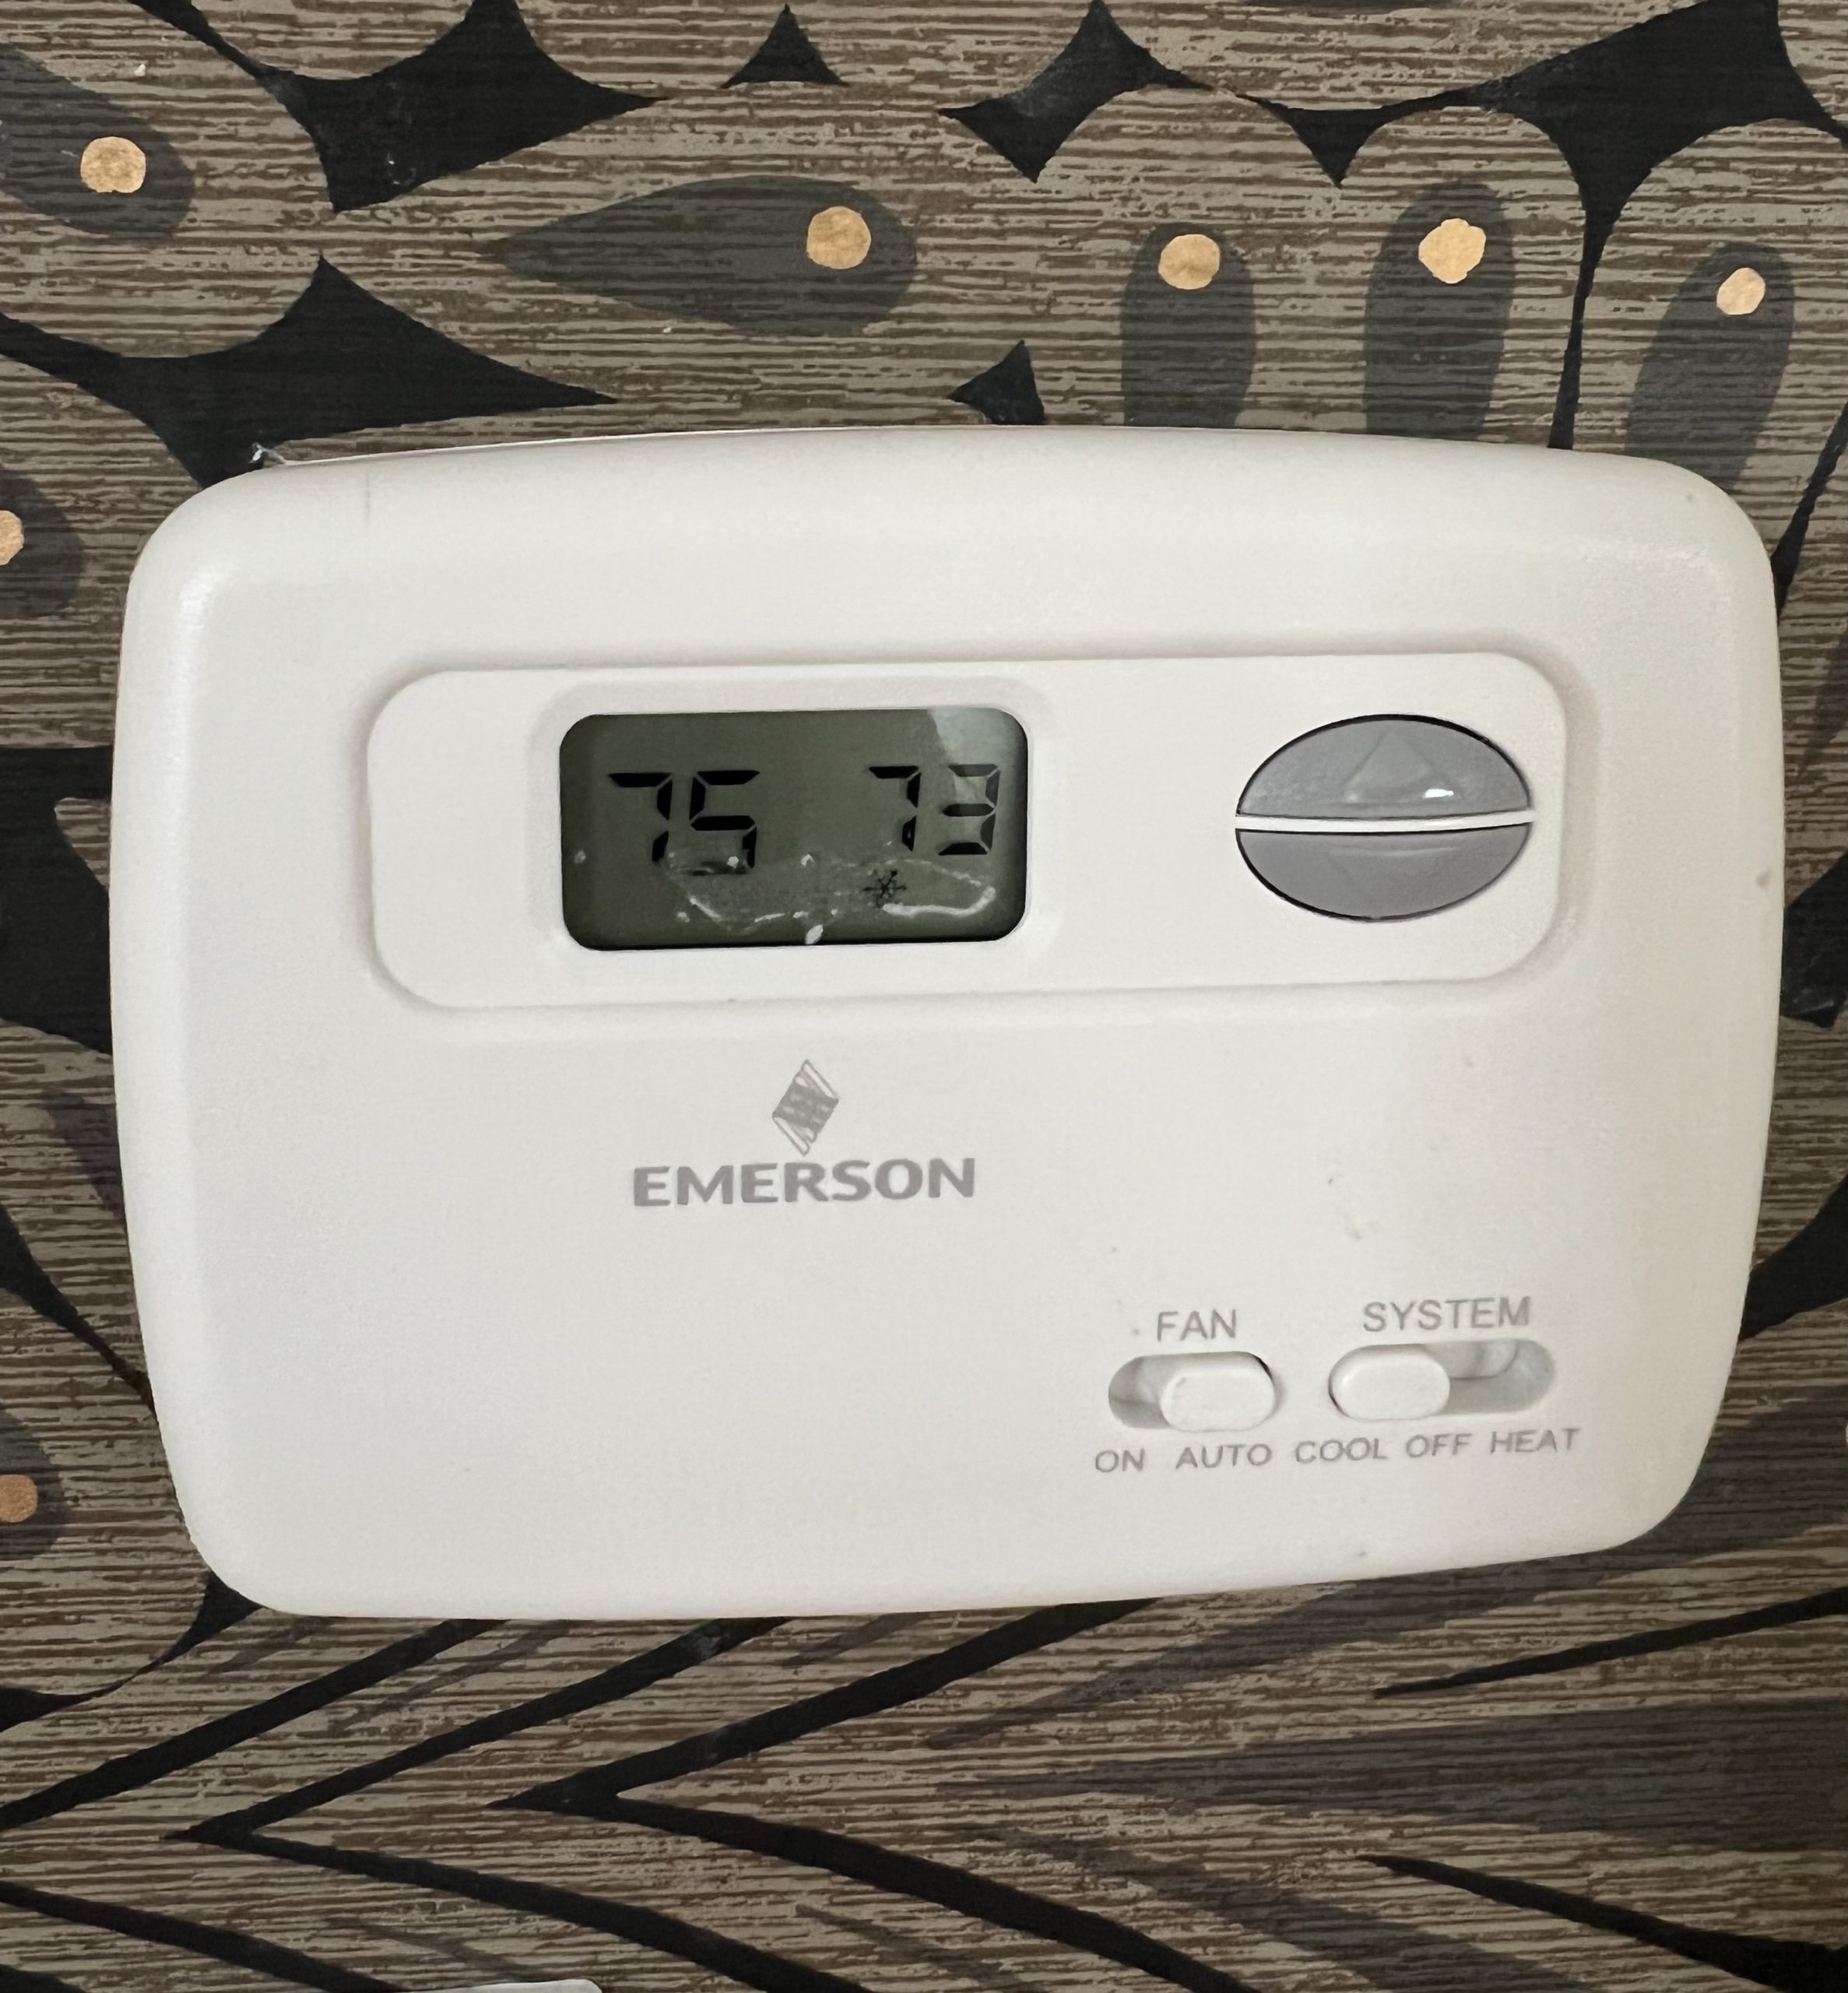 Winter Thermostat Settings  Bardi Heating, Cooling & Plumbing